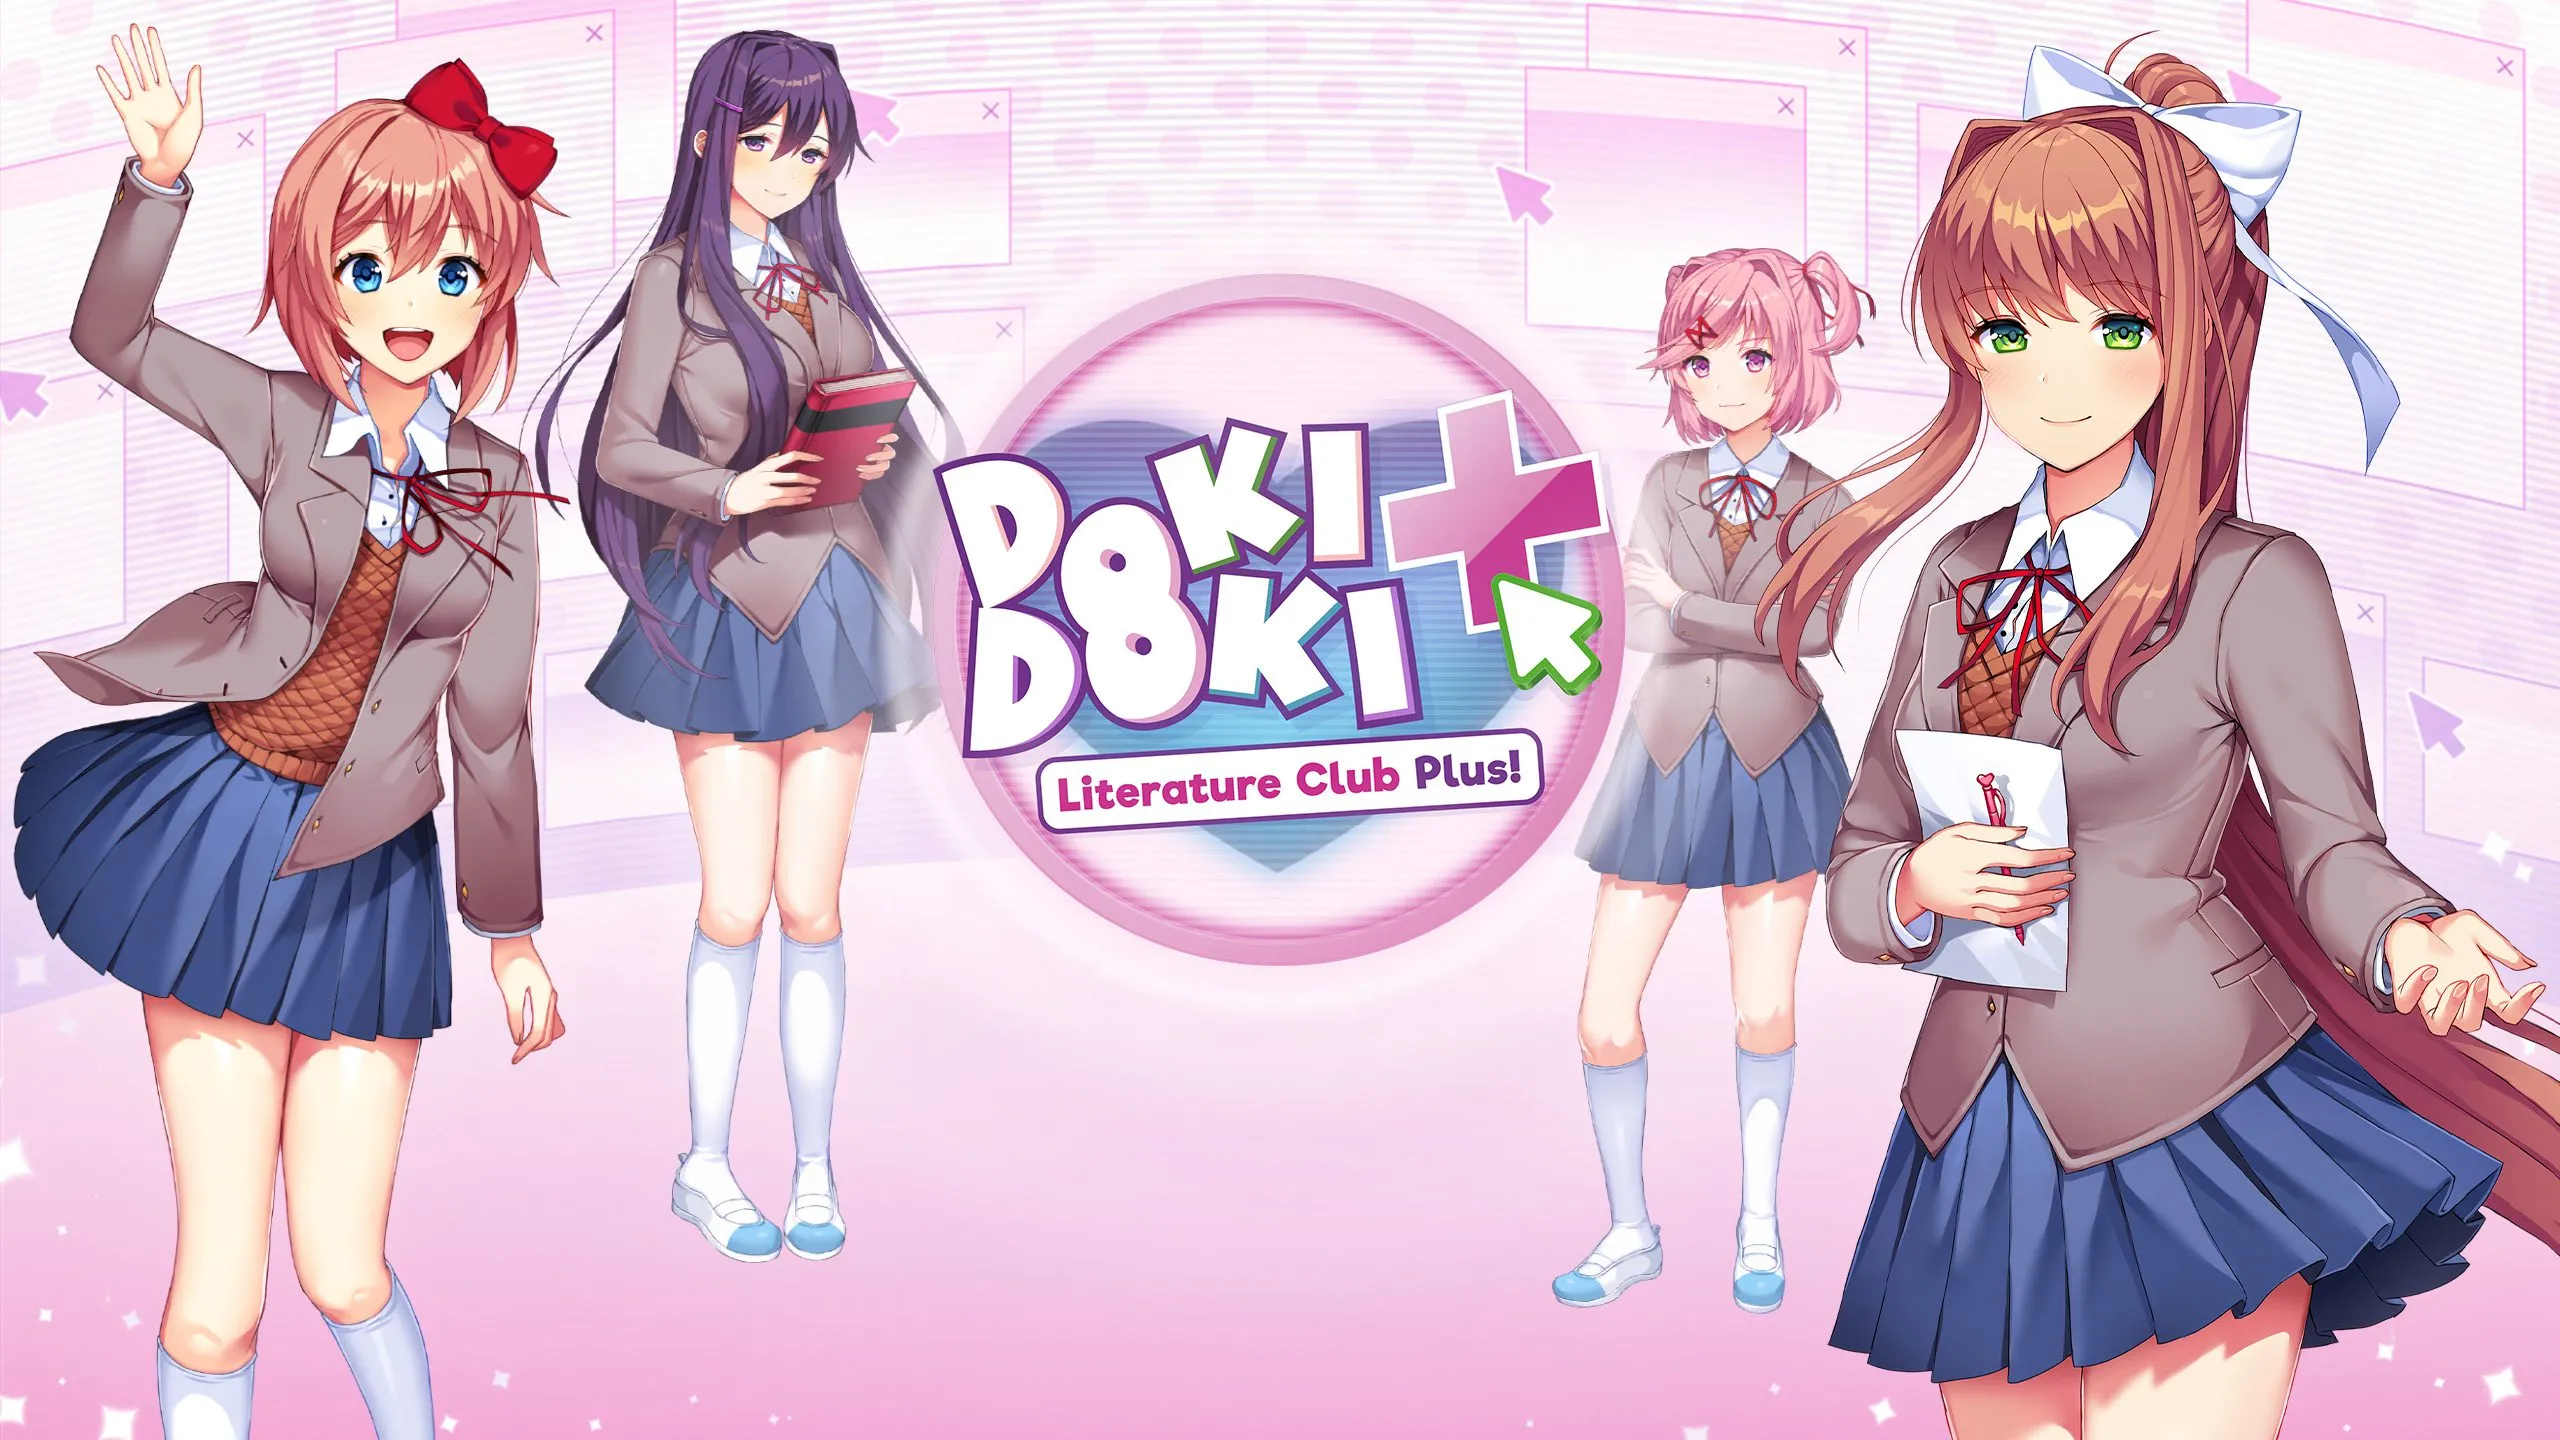 Contest: Doki Doki Literature Club Plus for PS4, Switch, Steam, or Xbox